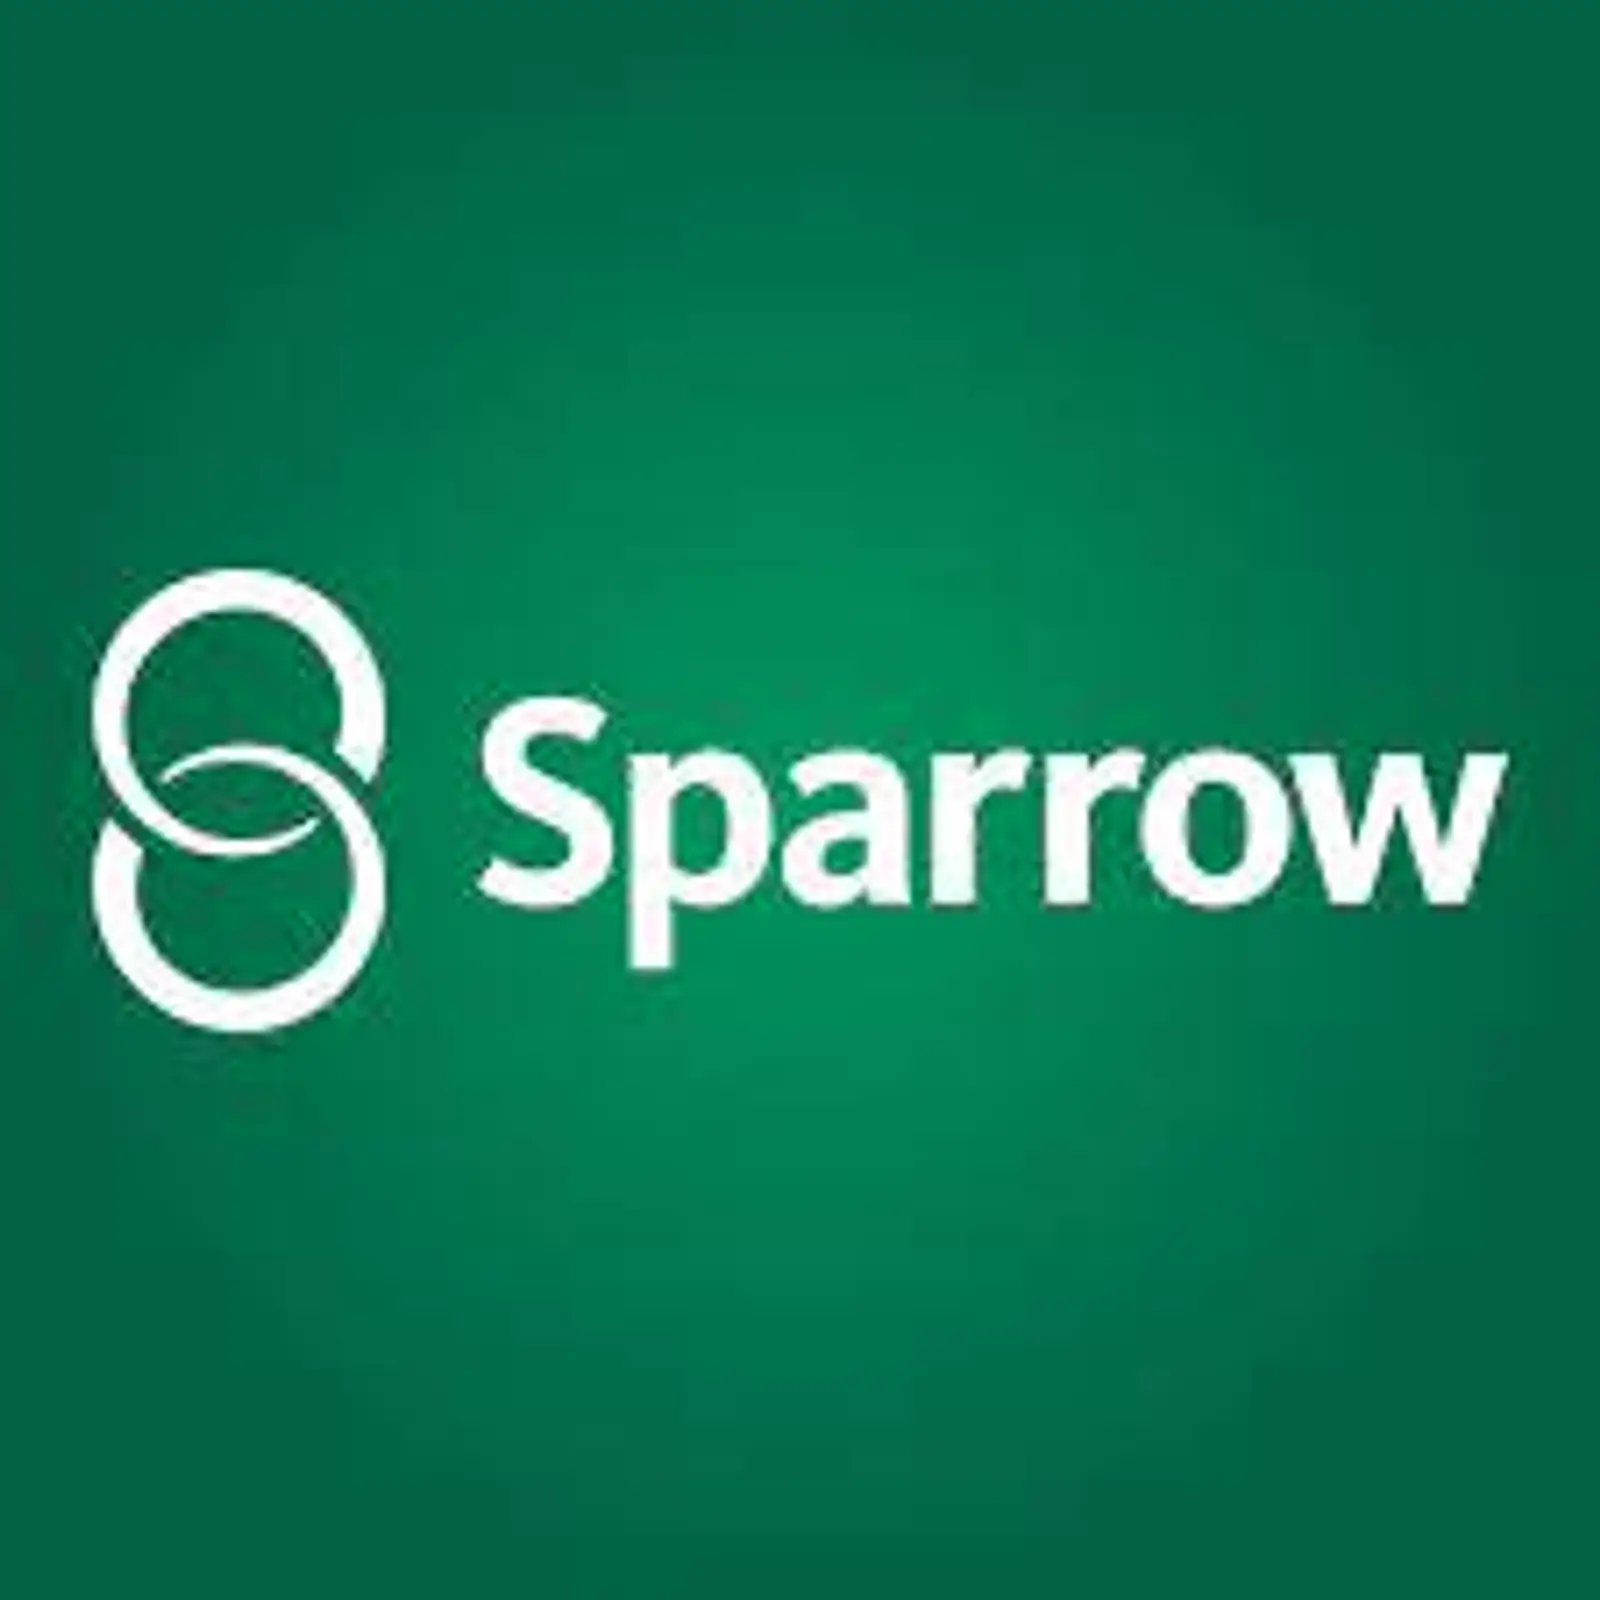 Sparrow Hospital  logo